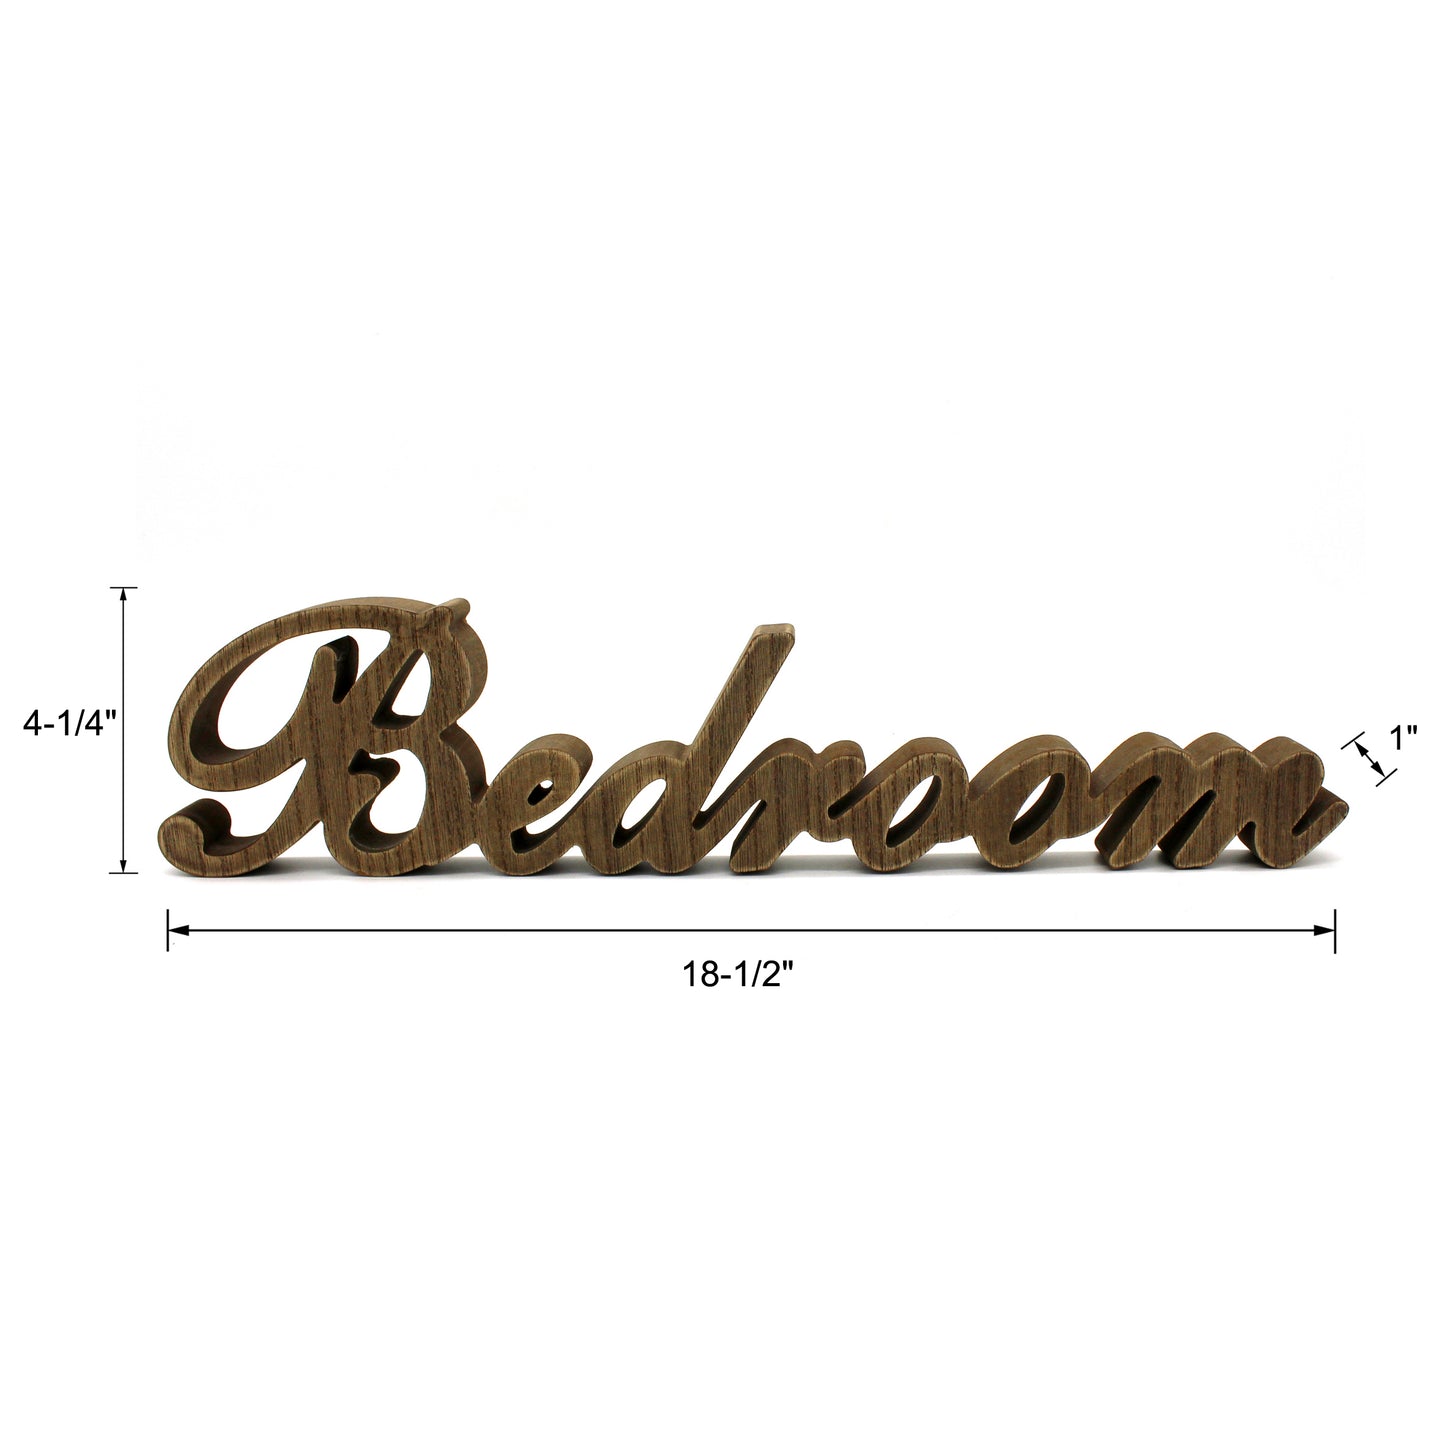 CVHOMEDECO. Rustic Vintage Distressed Wooden Words Sign Free Standing "Bedroom" Desk/Table/Shelf/Door/Home Wall Decoration Art, 18.5 x 4.25 x 1 Inch